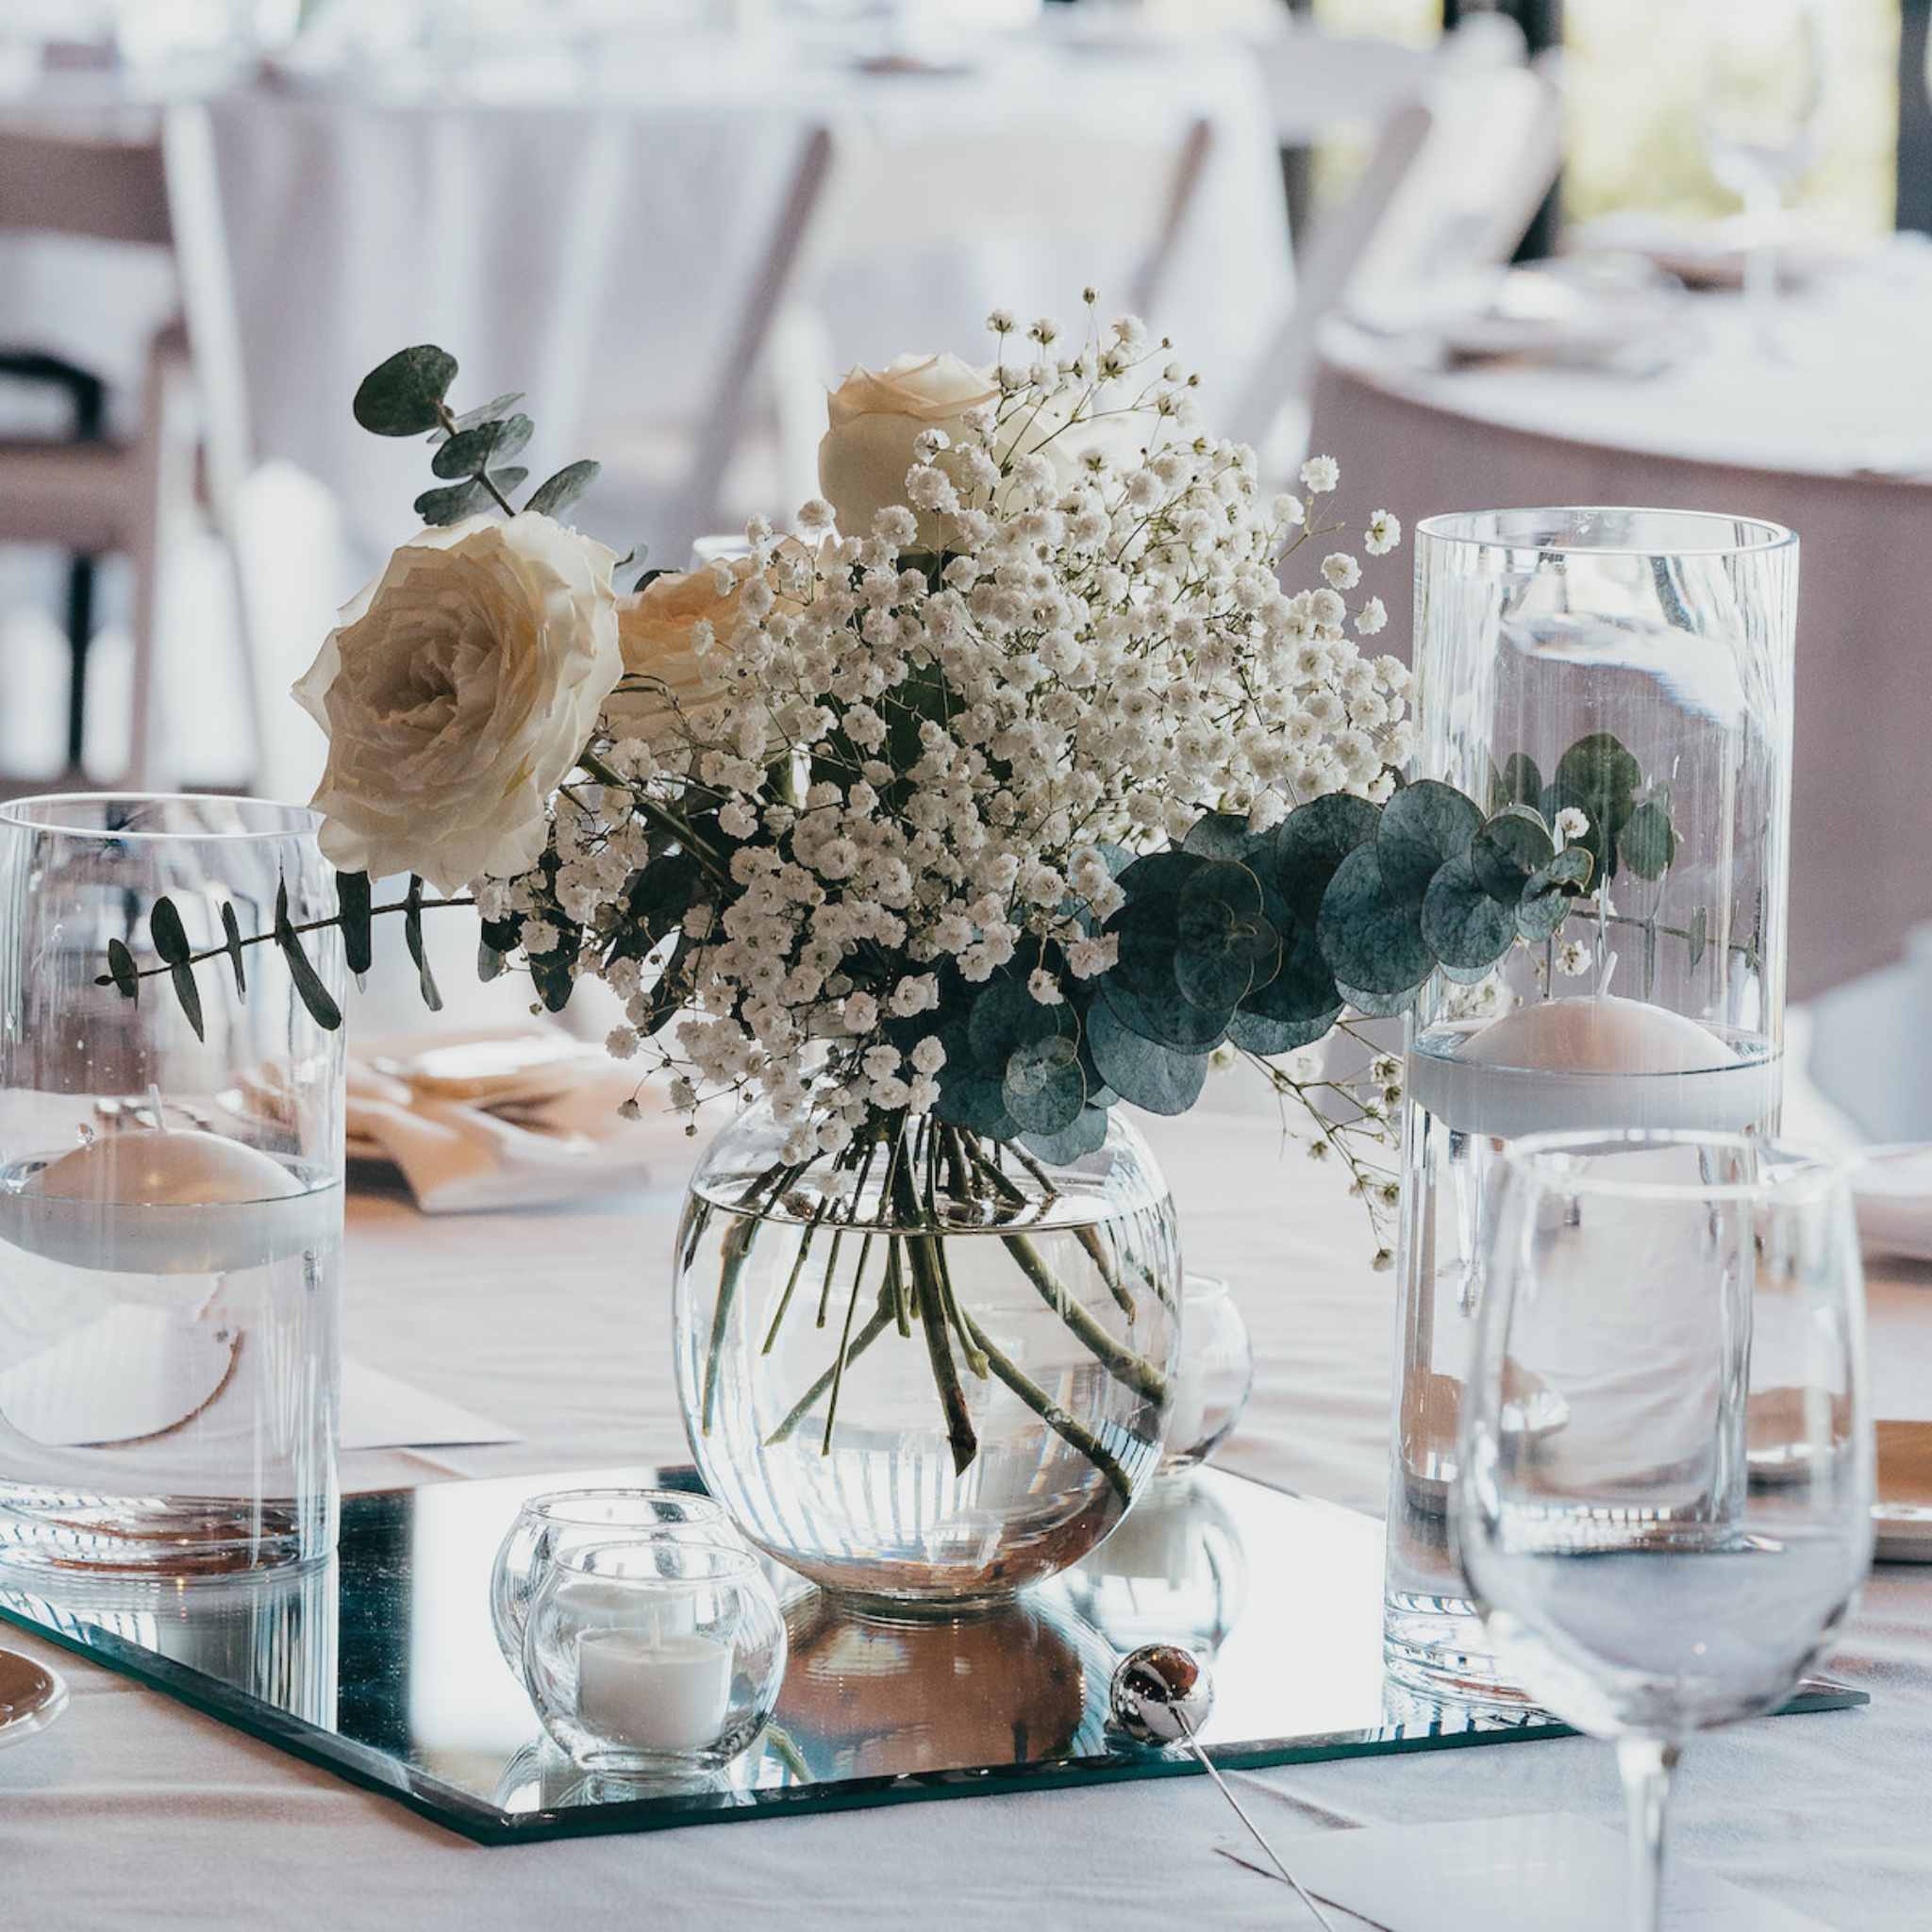 Beija Flor - Darwin wedding & event hire - Bubble Vase Large in White Floral Arrangement